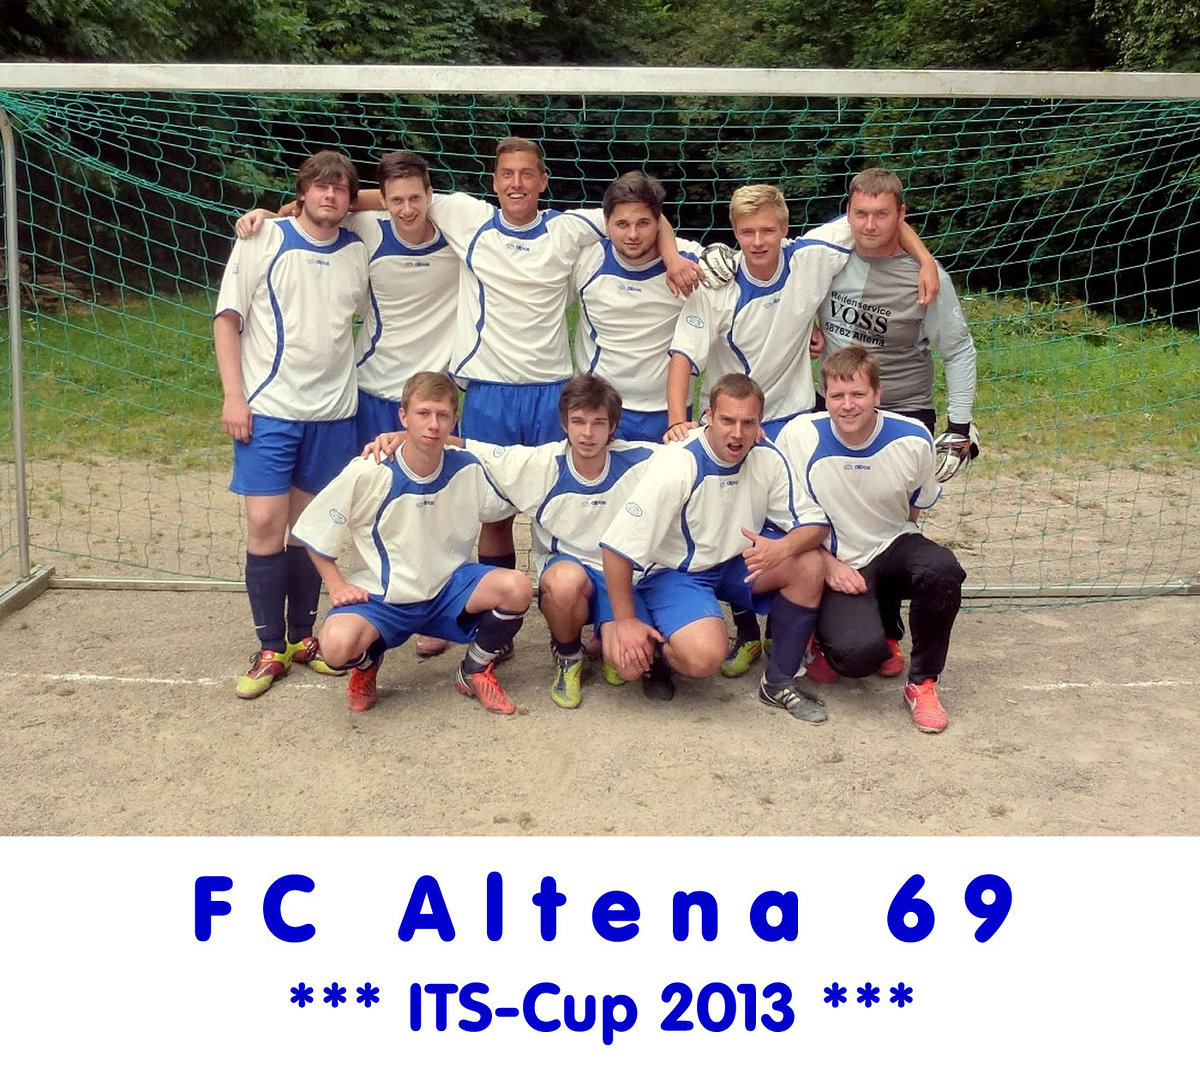 Its cup 2013   teamfotos   fc altena 69 retina